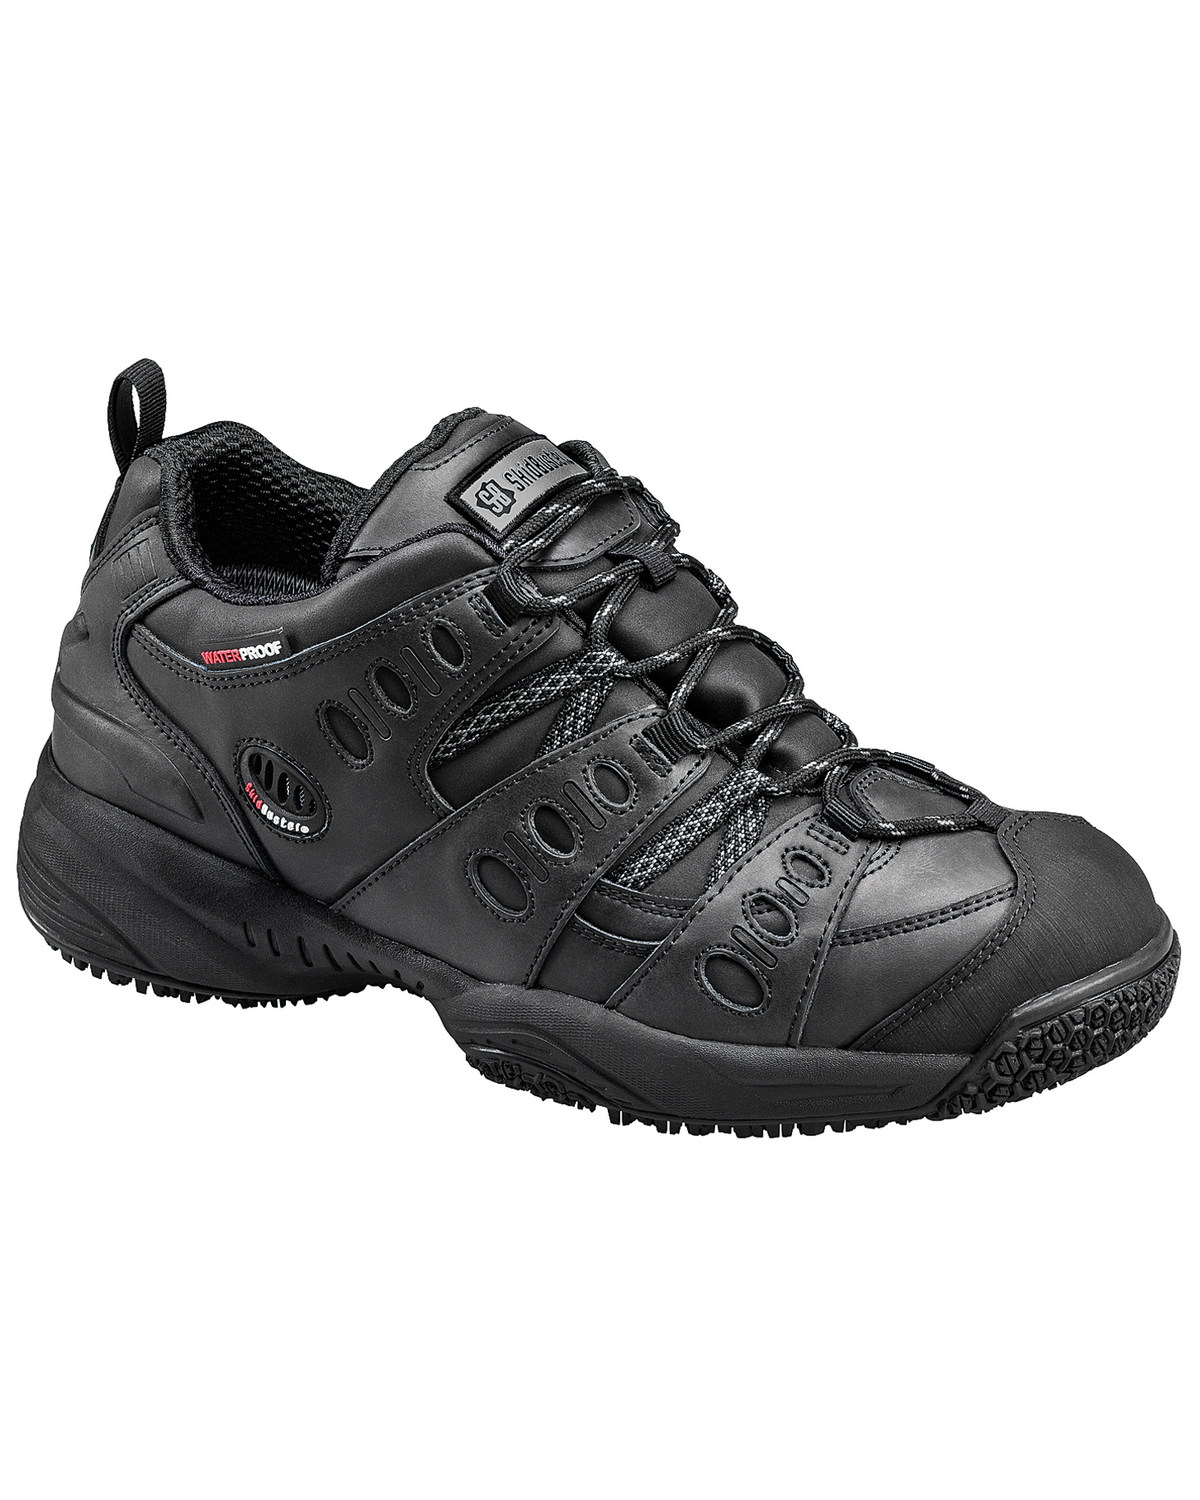 black work shoes slip resistant